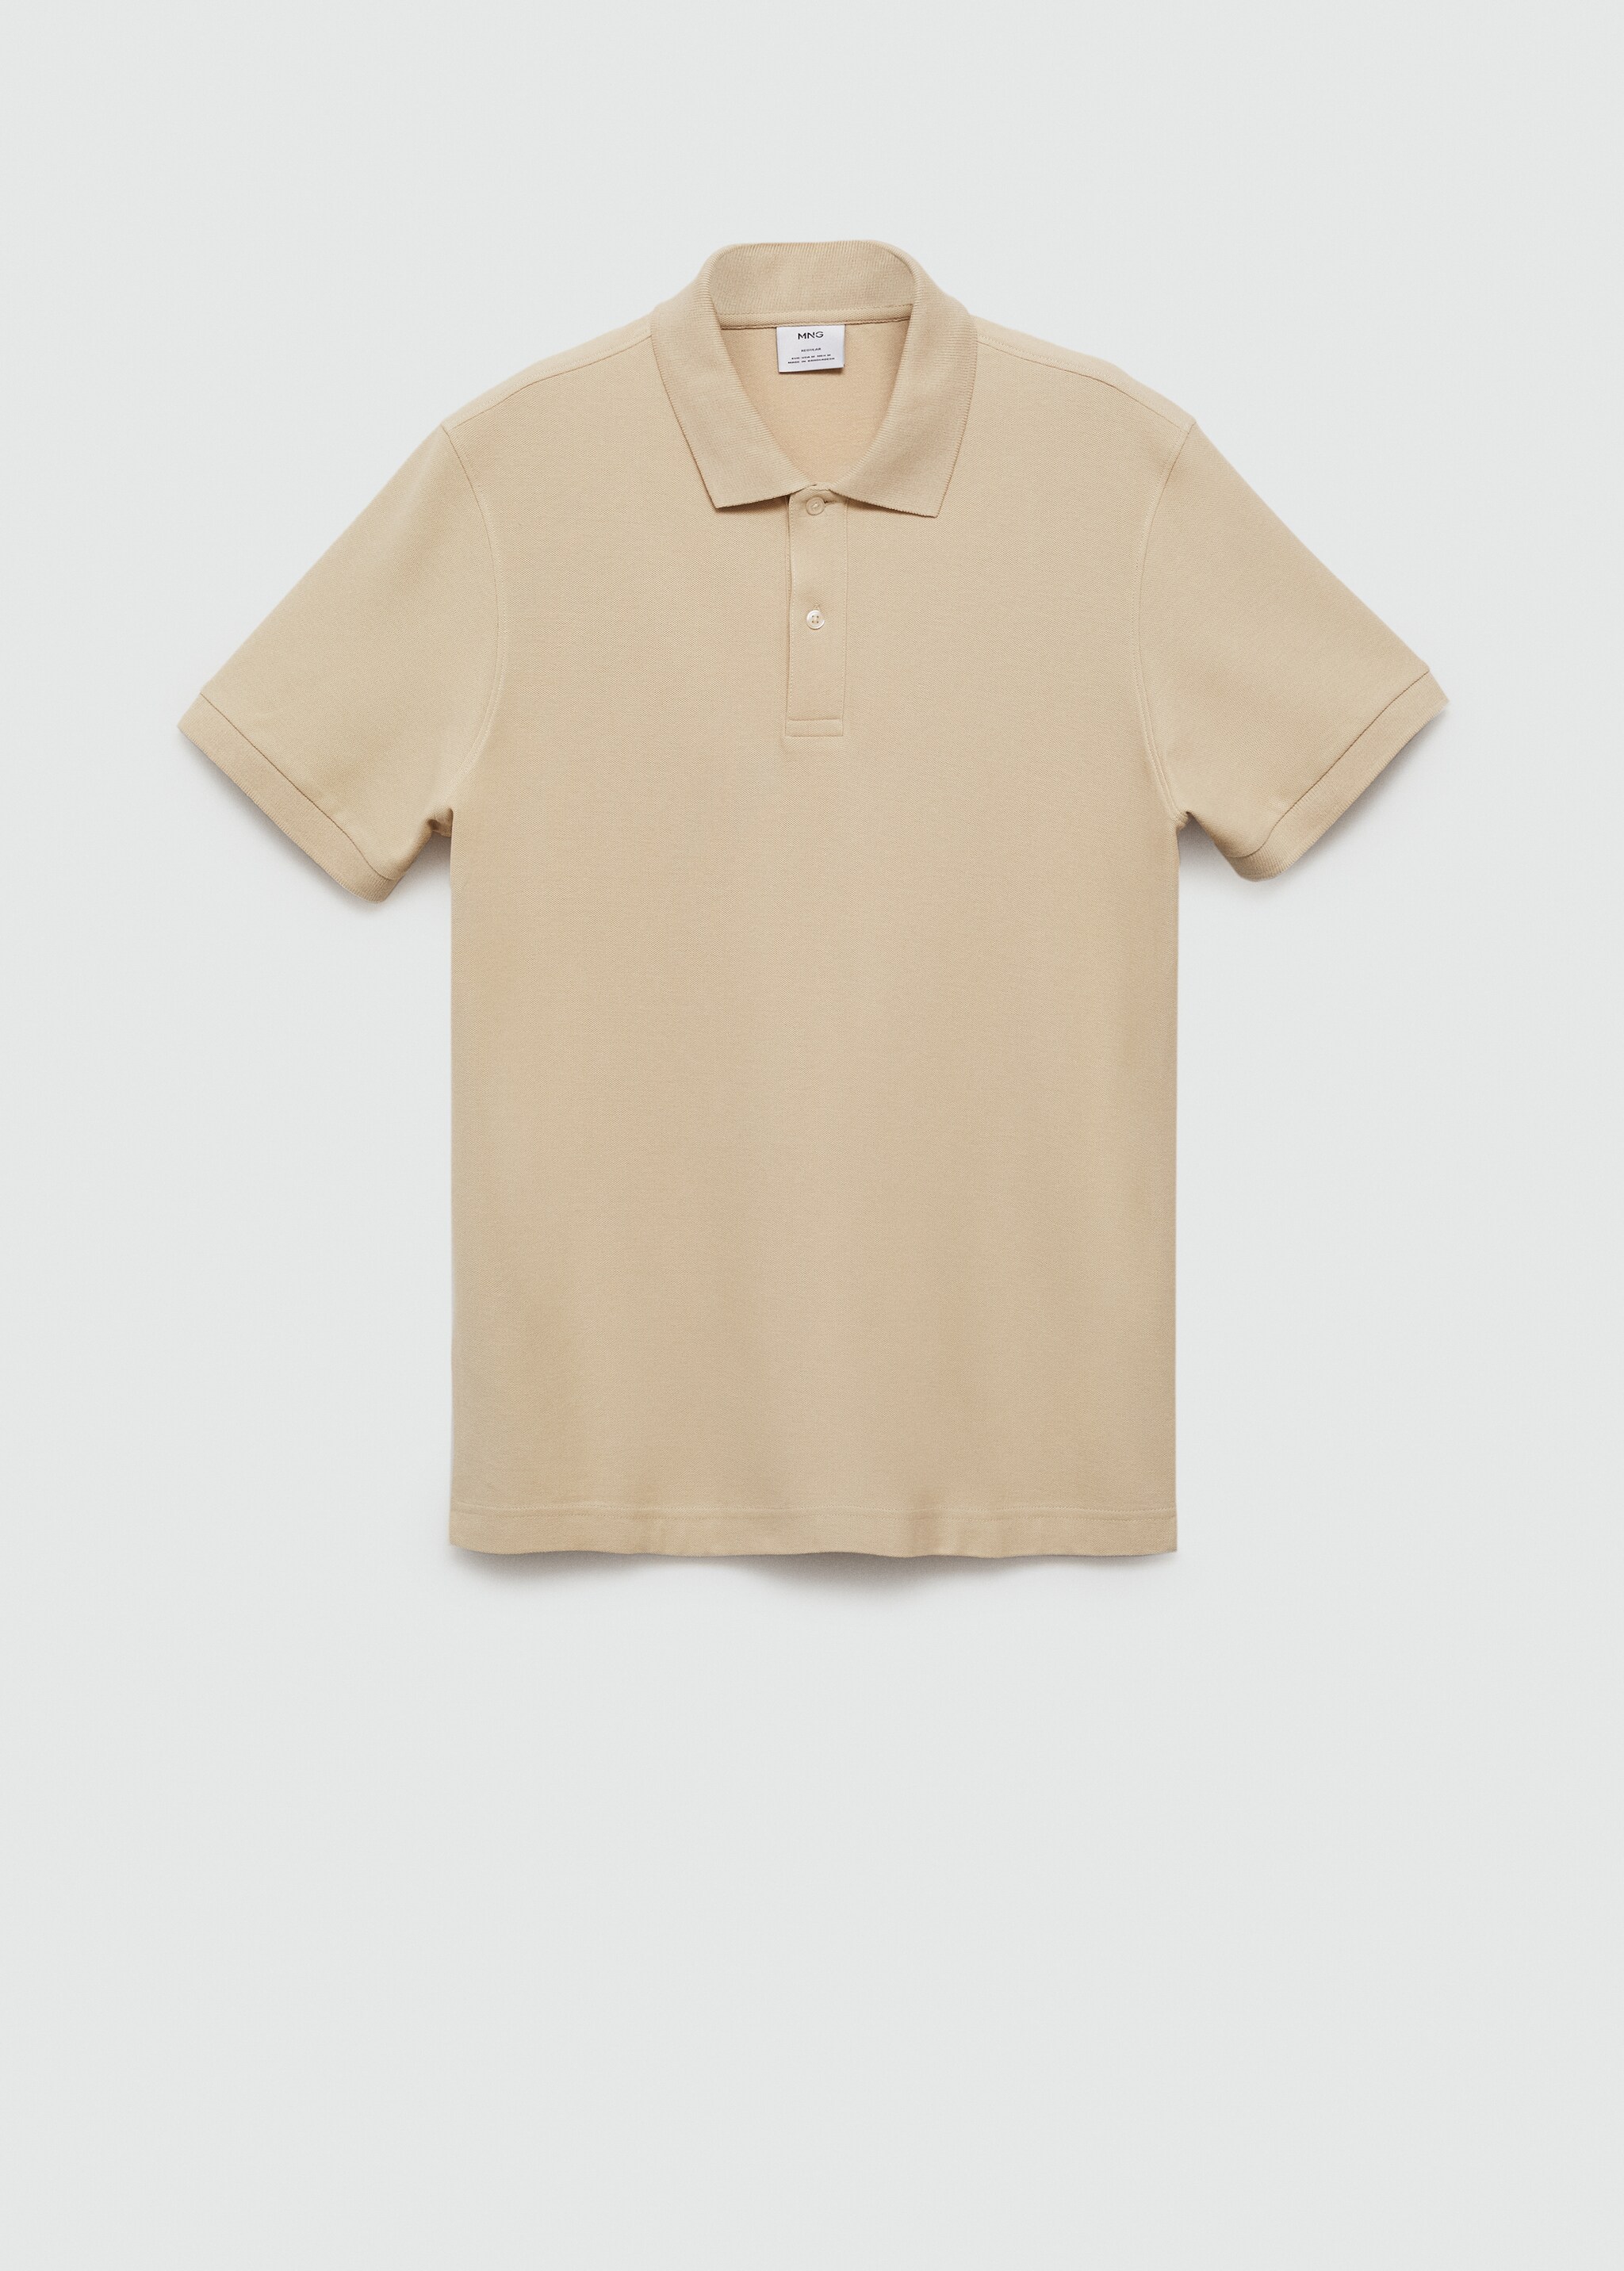 100% cotton pique polo shirt - Article without model